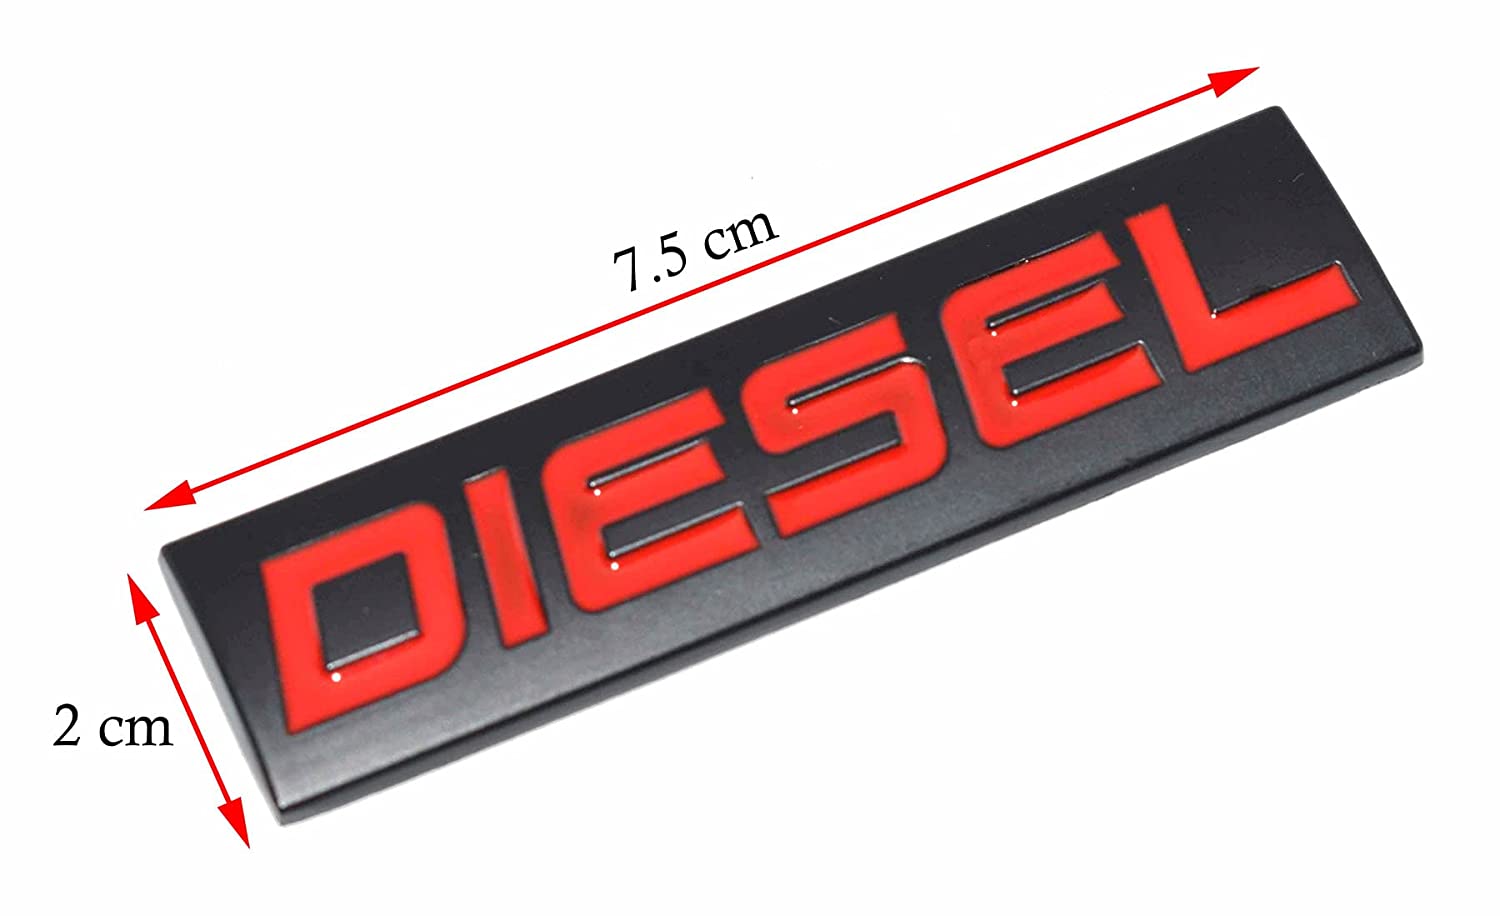 Diesel Sticker for Car Fuel Tank, Metal (Black)